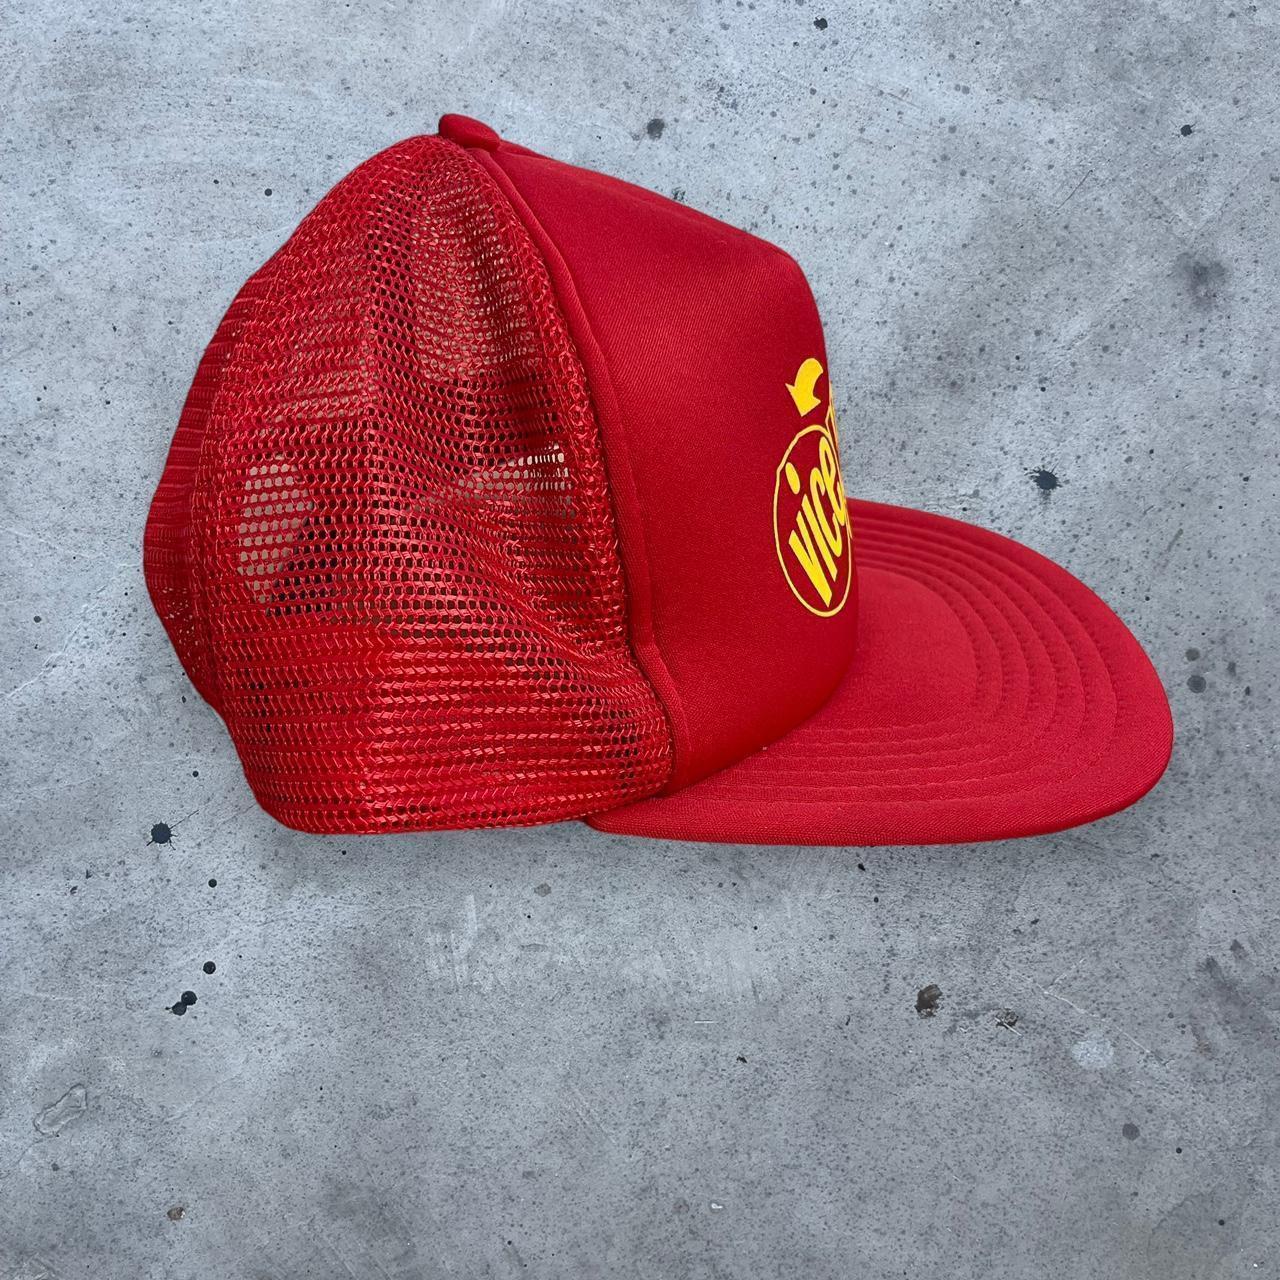 Vintage red trucker cap